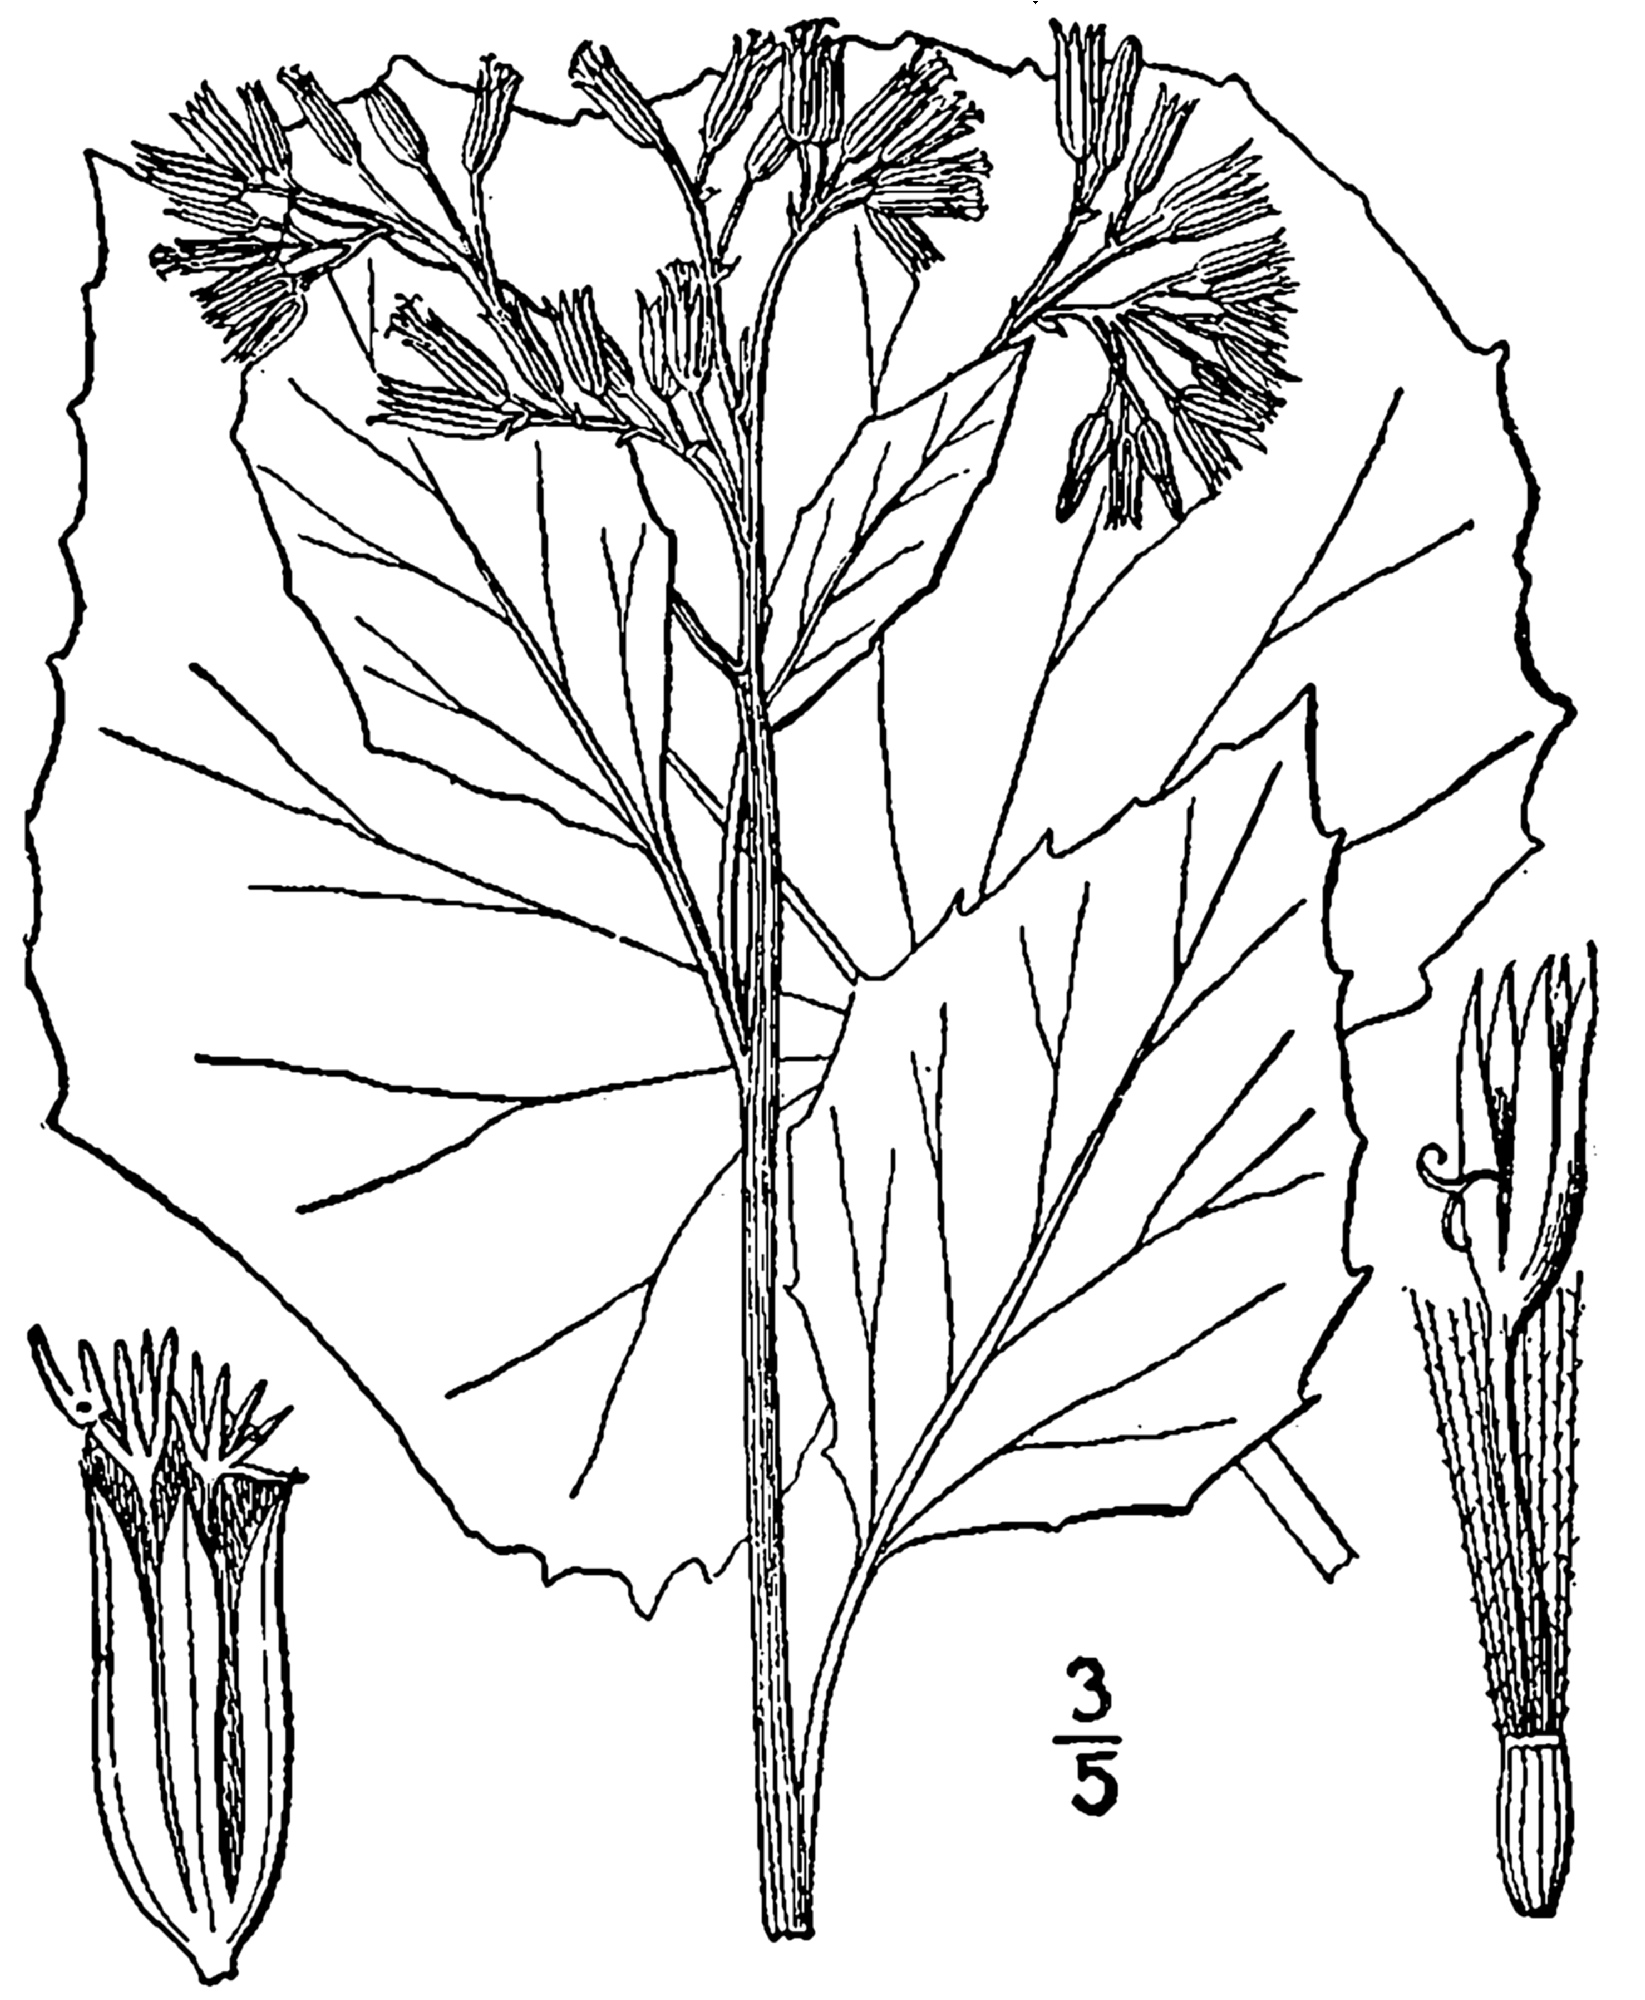 1913 Pale Indian Plantain illustration.